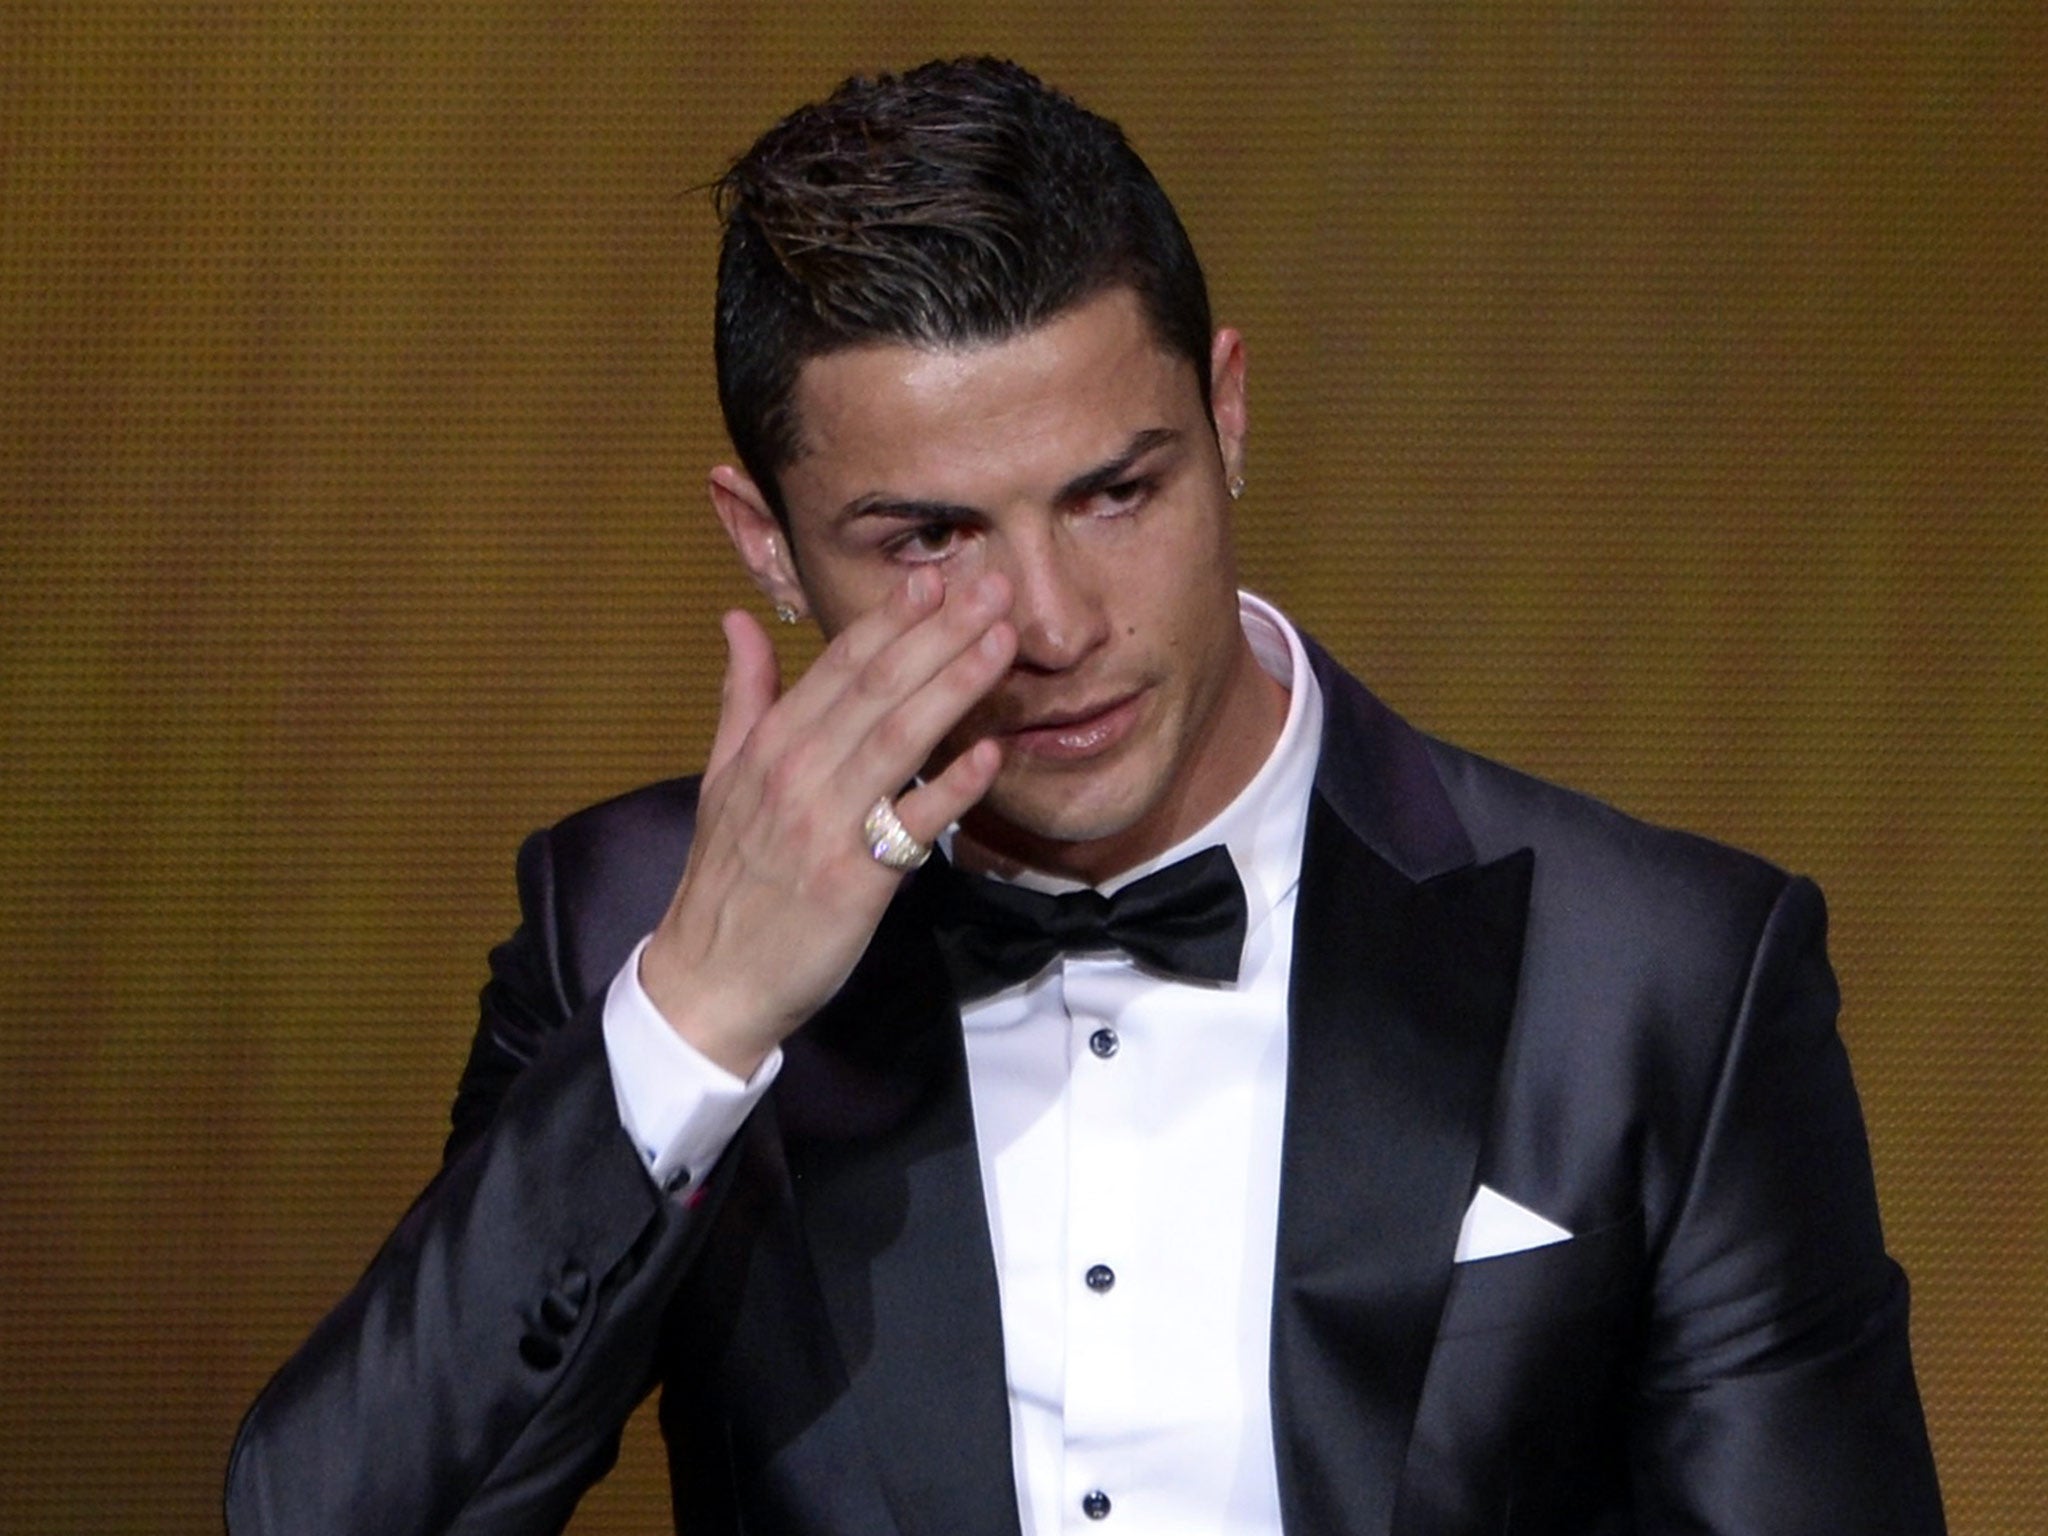 Cristiano Ronaldo fights back tears after winning the Fifa Ballon d'Or award